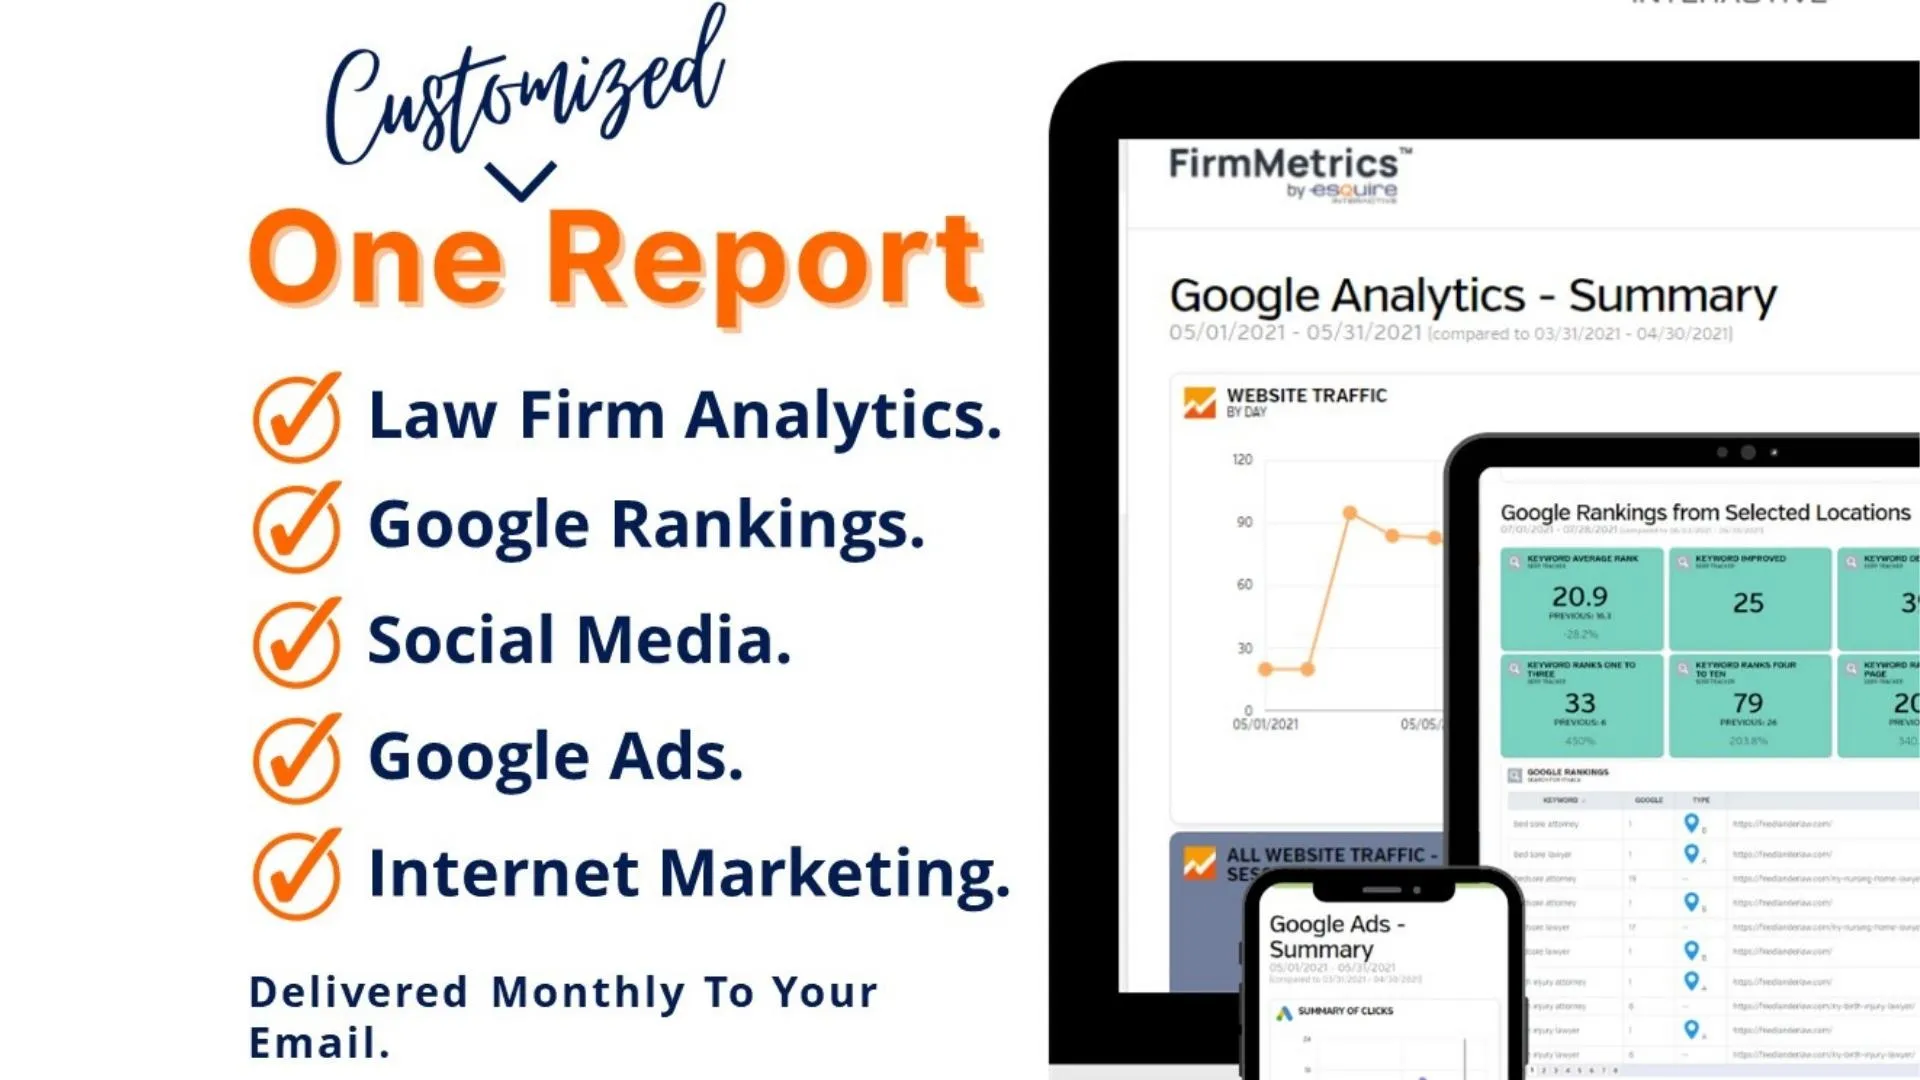 FirmMetrics - Law Firm Analytics Reports